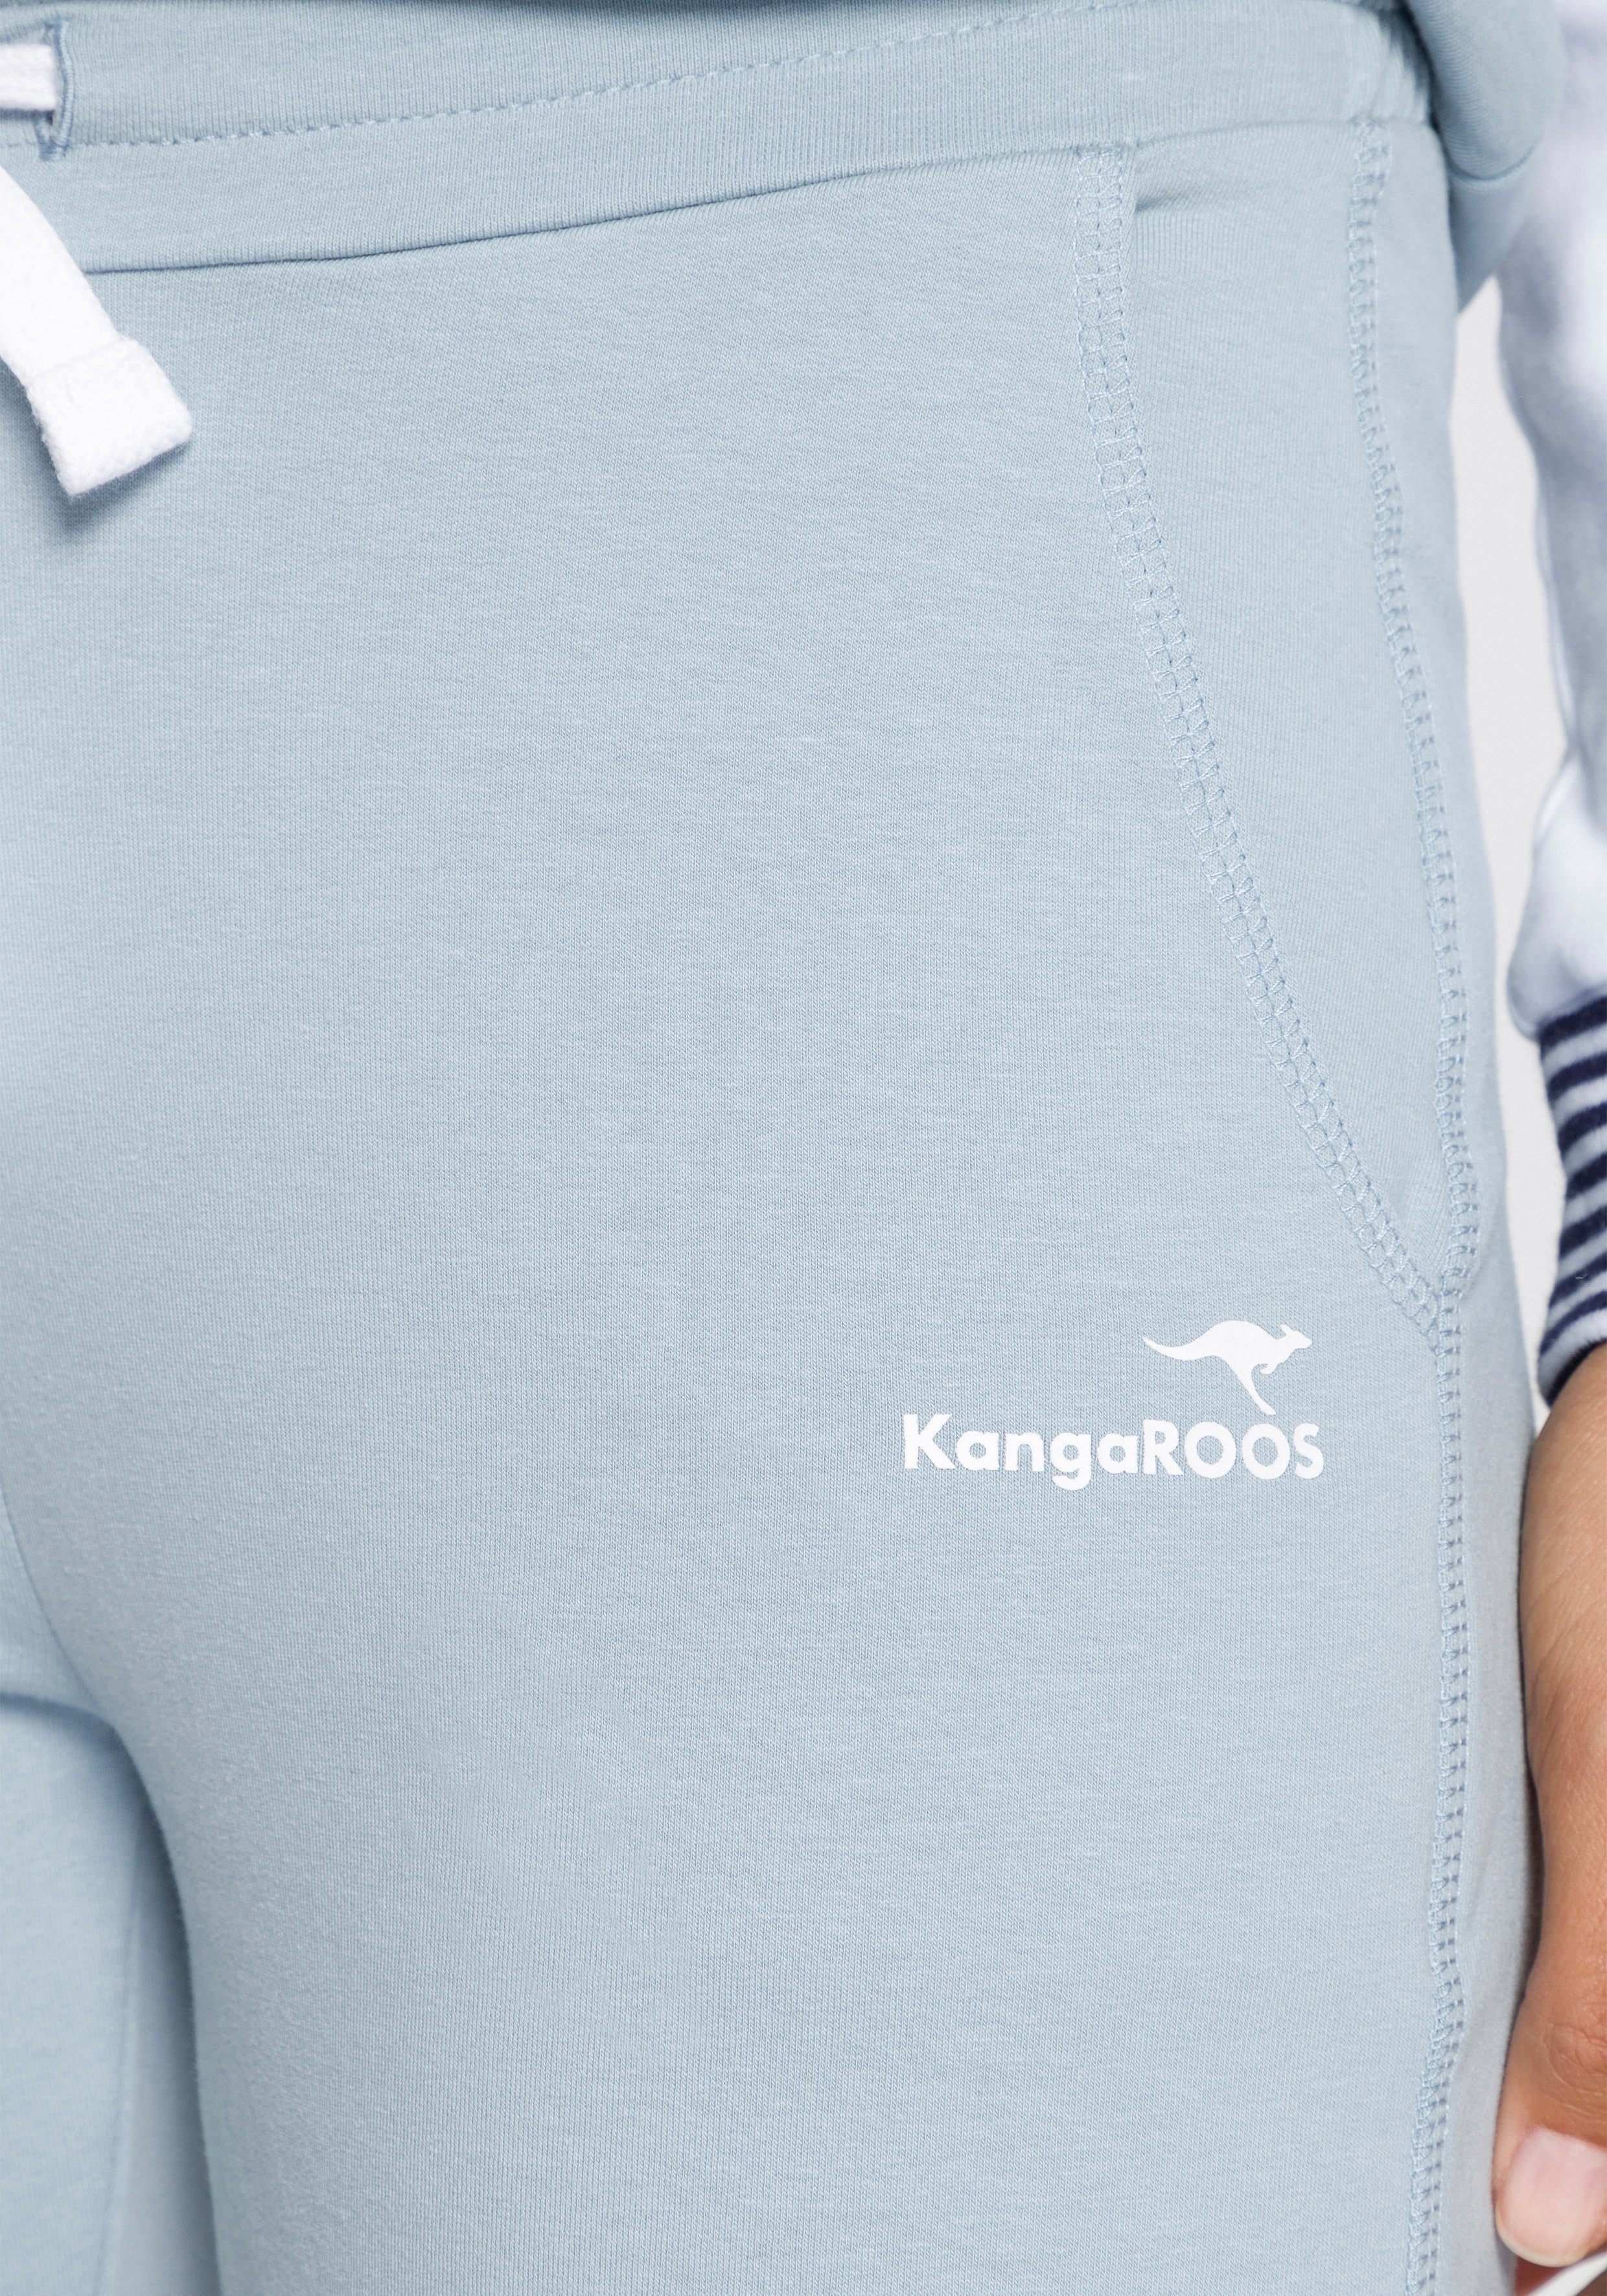 KangaROOS Jogginghose in graublau 7/8-Länge mit Logo-Druck